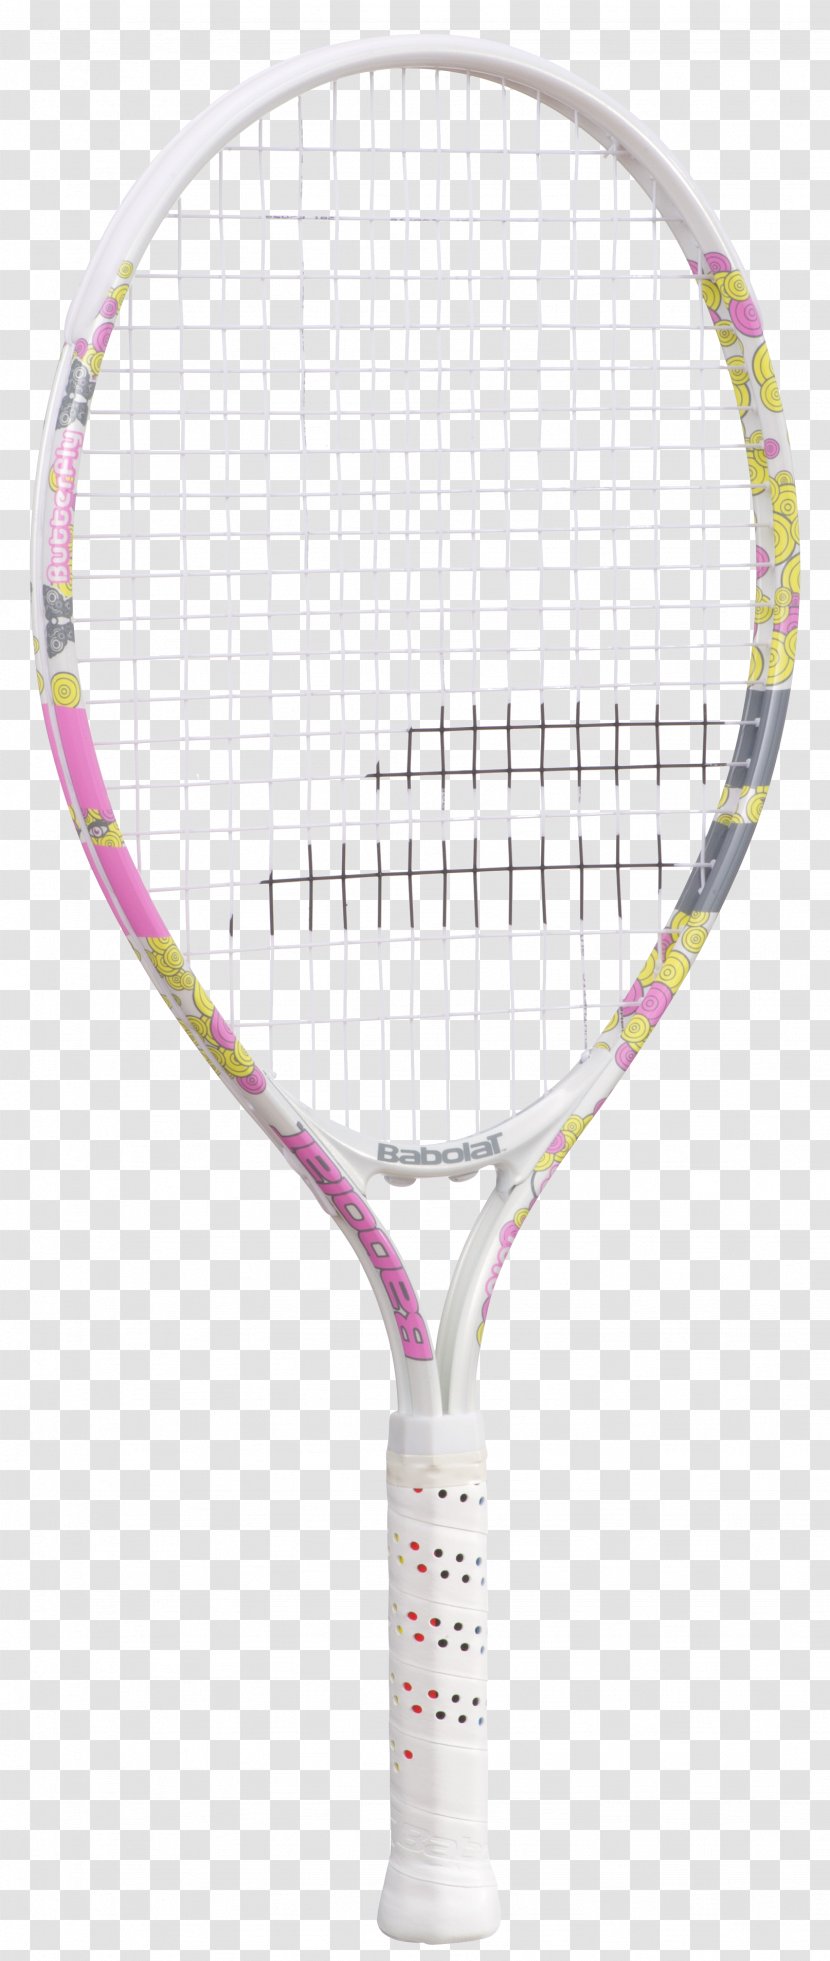 Racket Strings Babolat Rakieta Tenisowa Tennis - Accessory - Butterfly Composition Transparent PNG